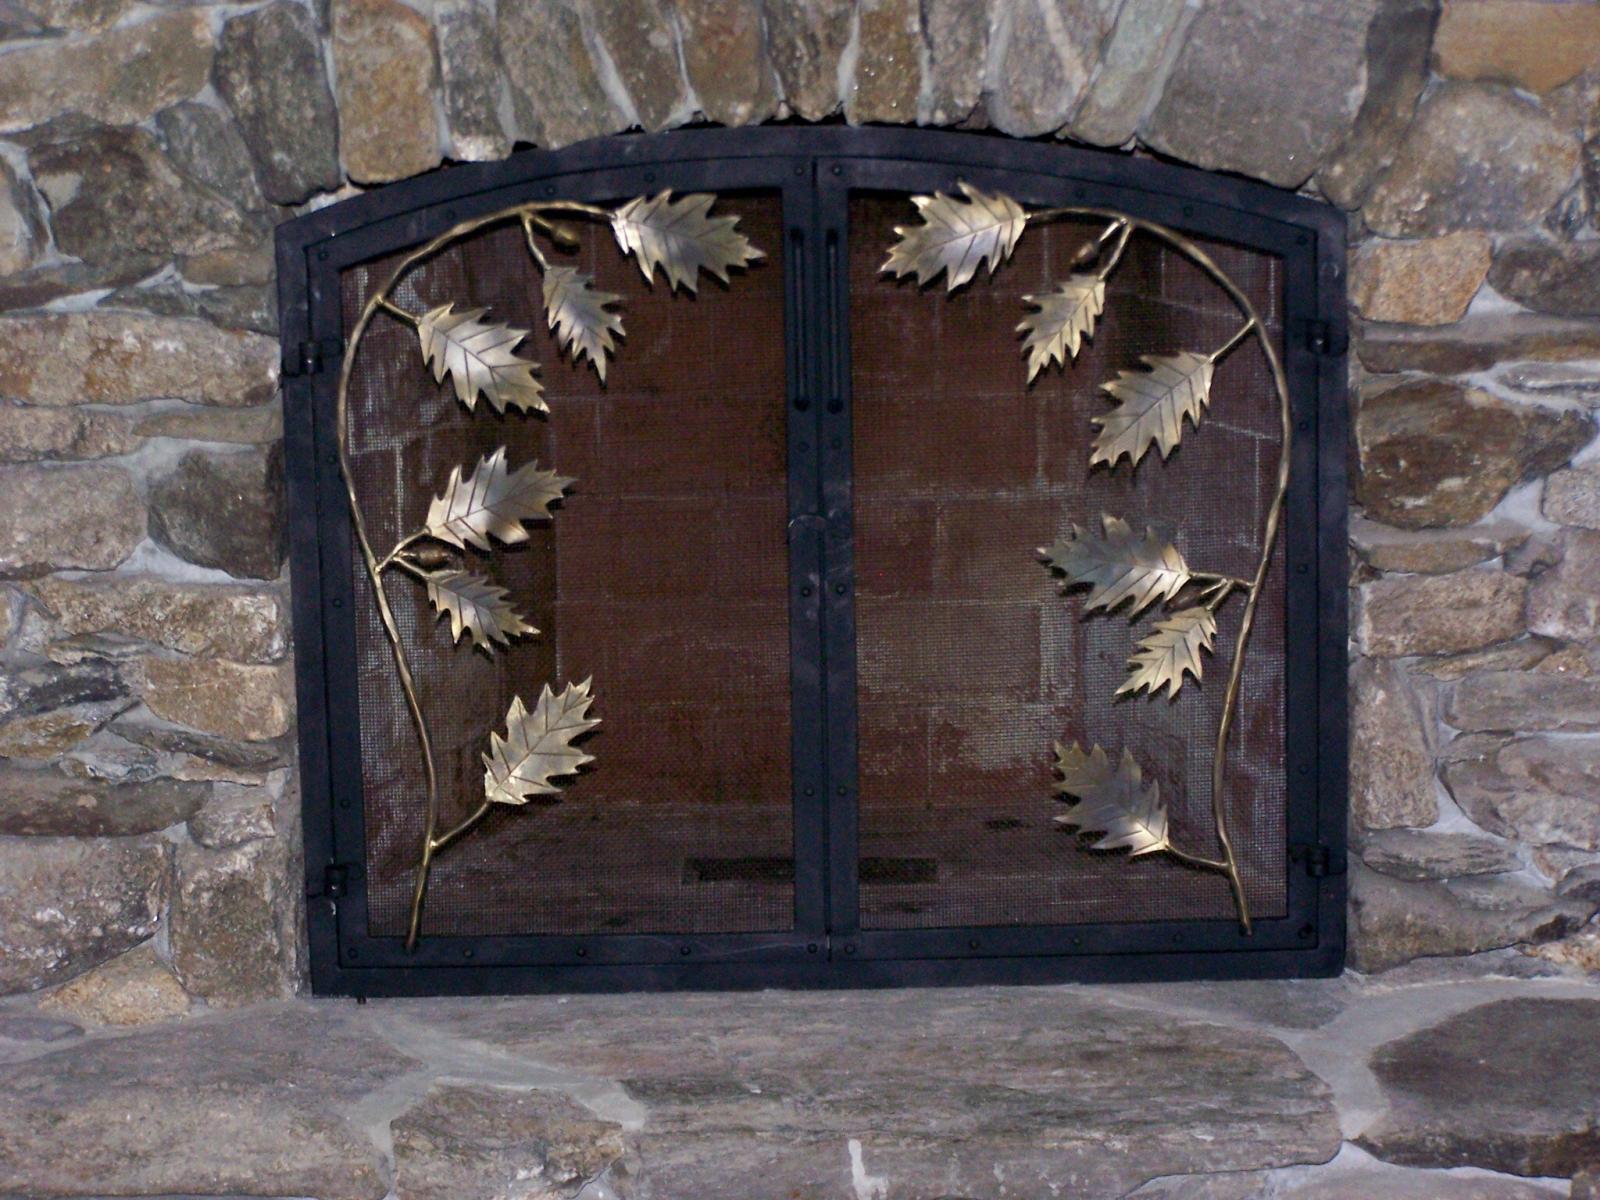 Fireplace screen